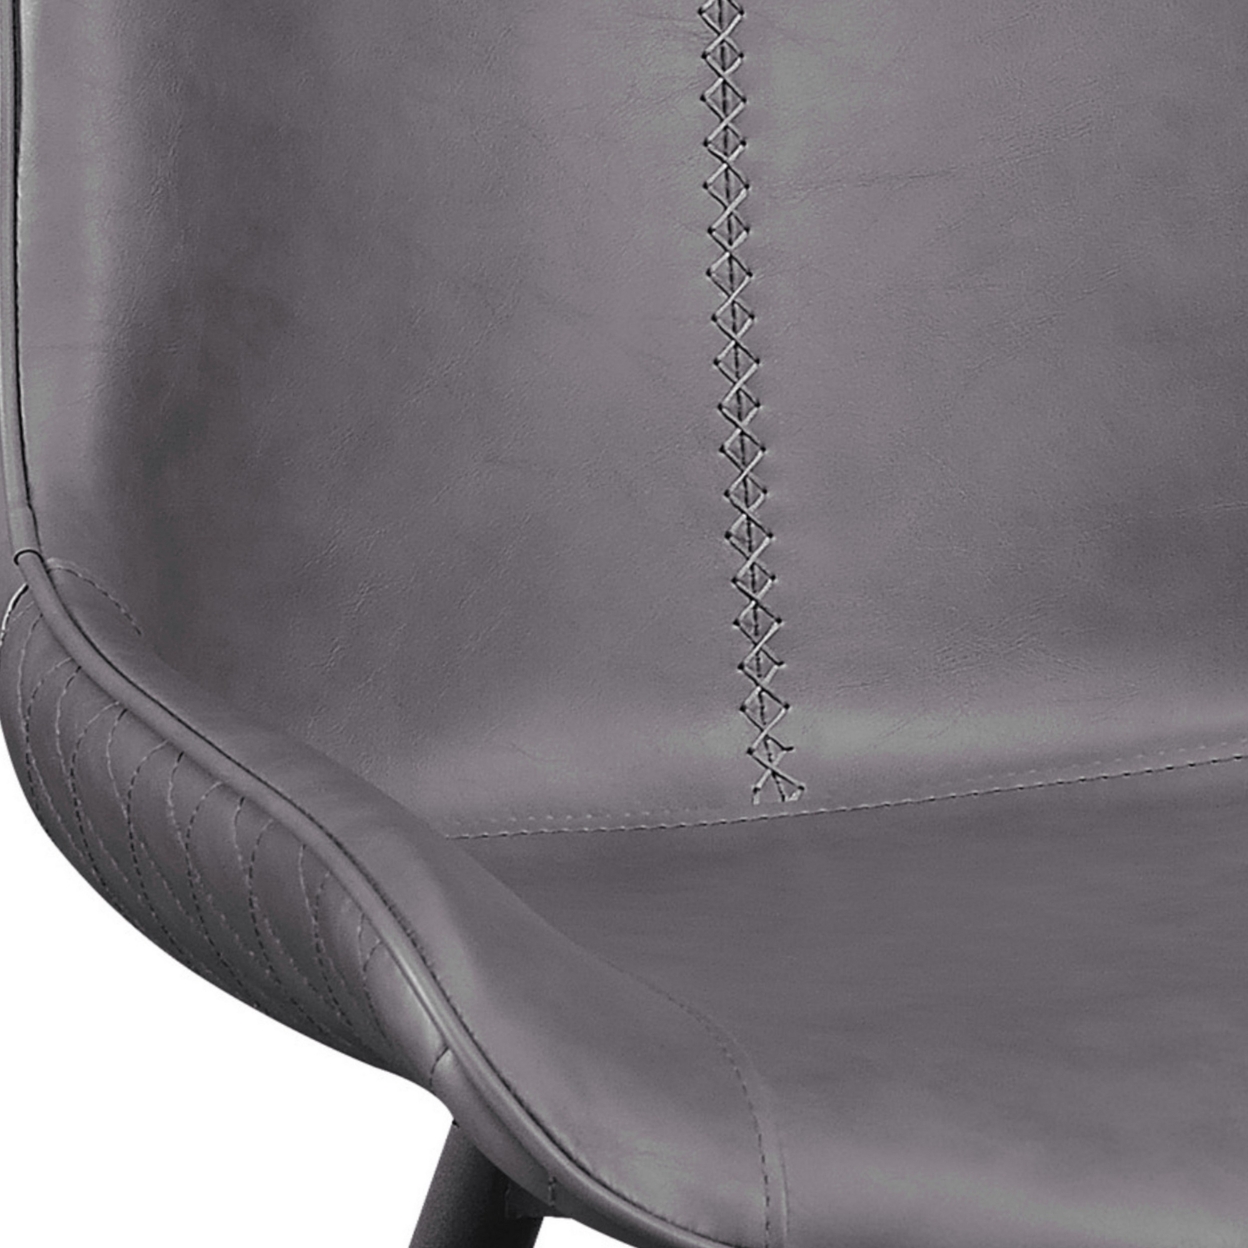 Leatherette Dining Chair With Diamond Pattern Stitching, Set Of 2, Gray- Saltoro Sherpi